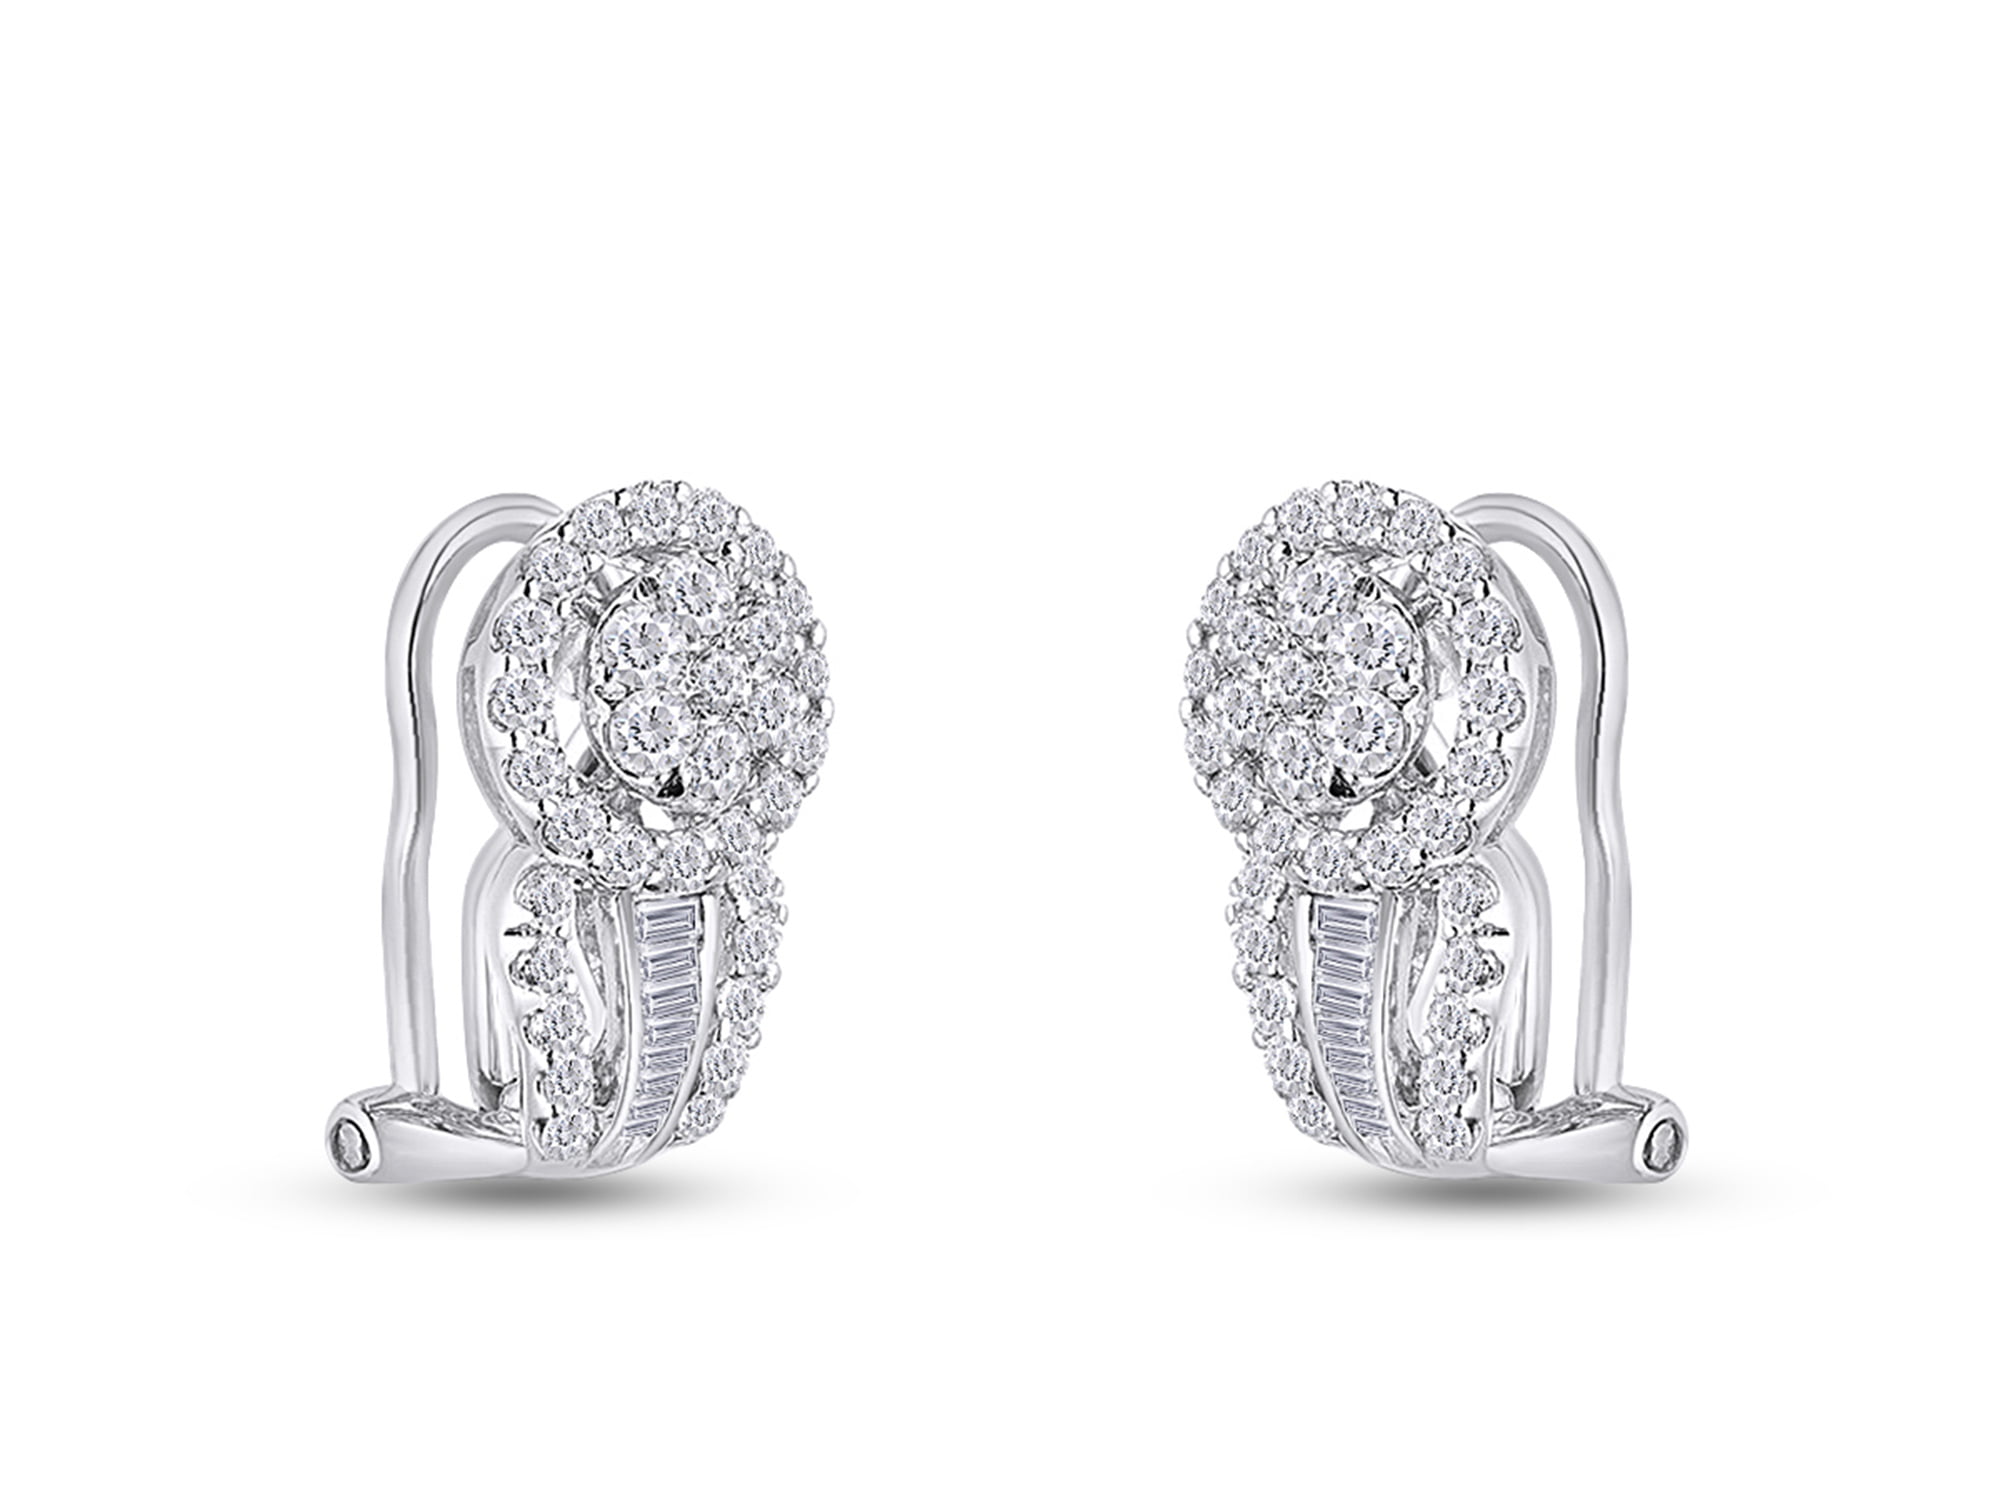 Gift Box Details about   Beautiful Sparkling Sterling Silver Zirconia Hoop Earrings Huggies